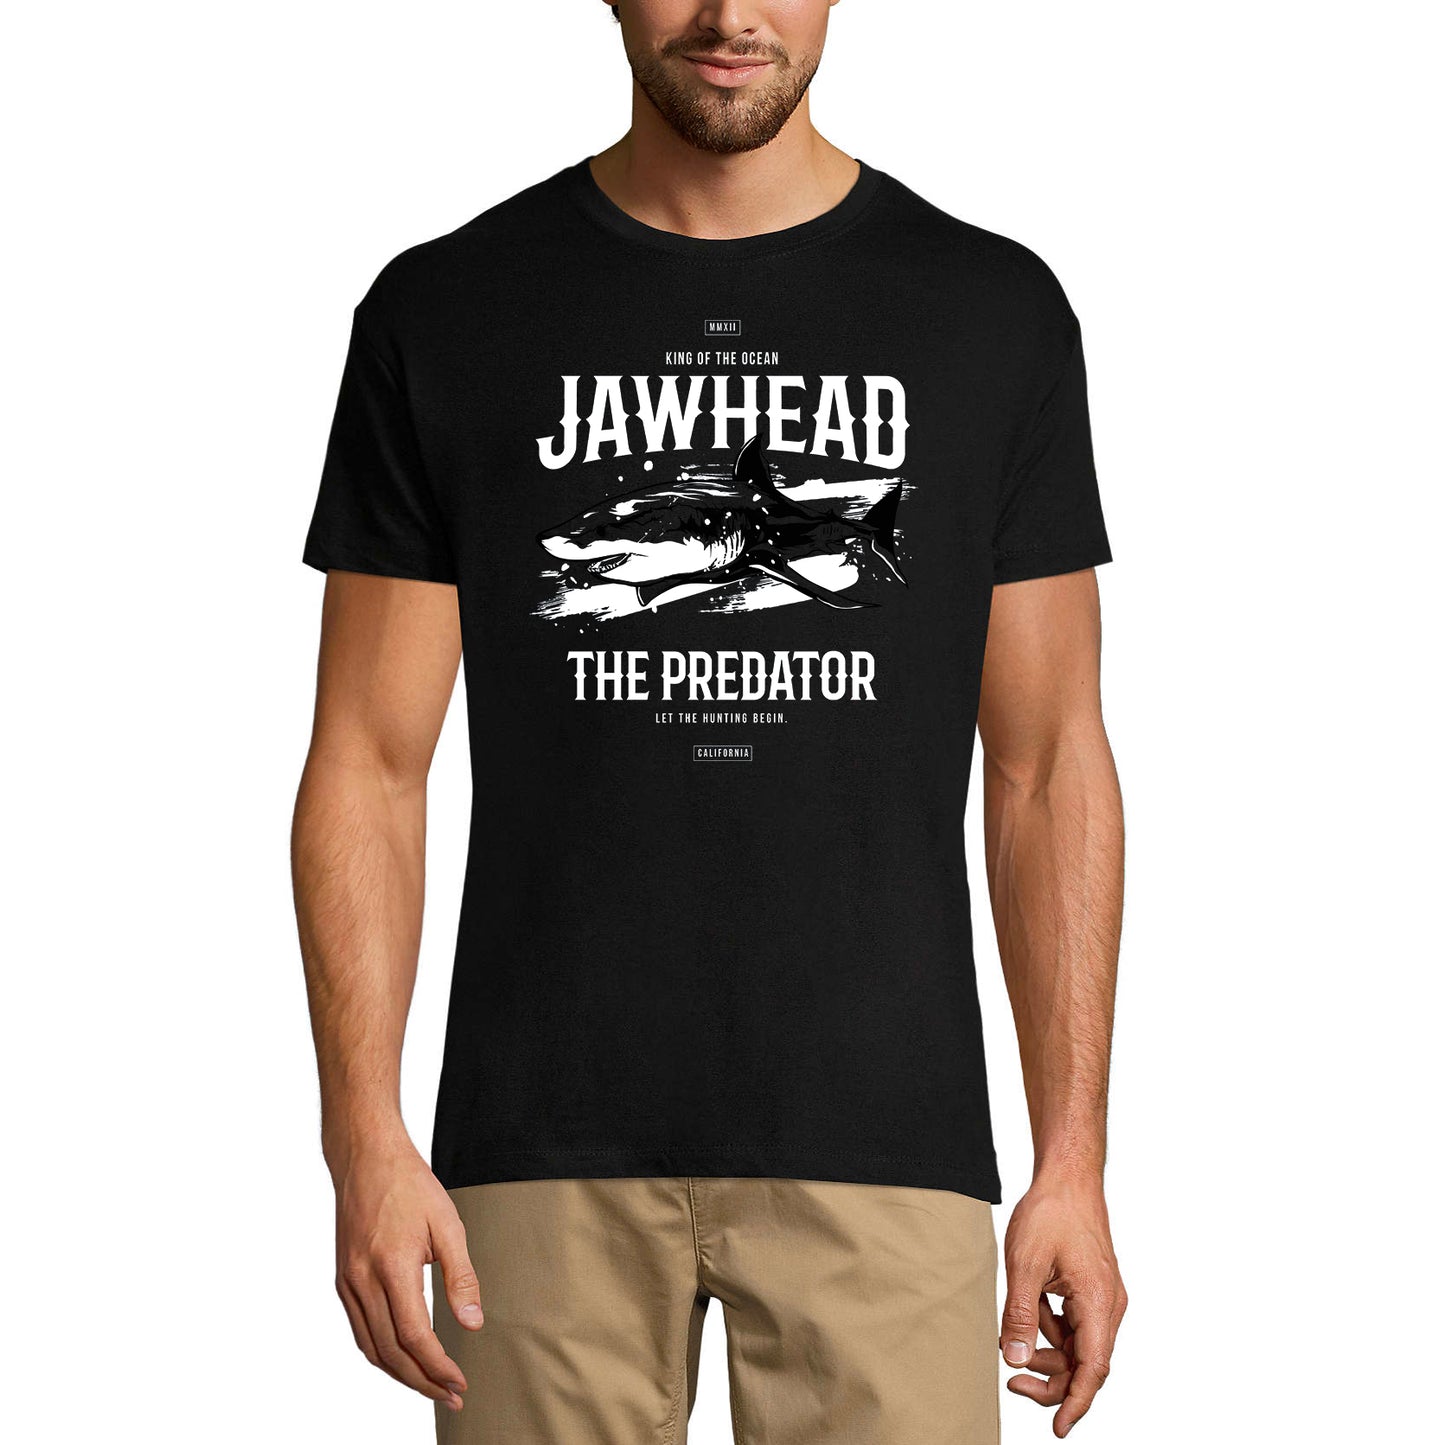 ULTRABASIC Men's Graphic T-Shirt King of the Ocean - Jawhead Shirt for Men